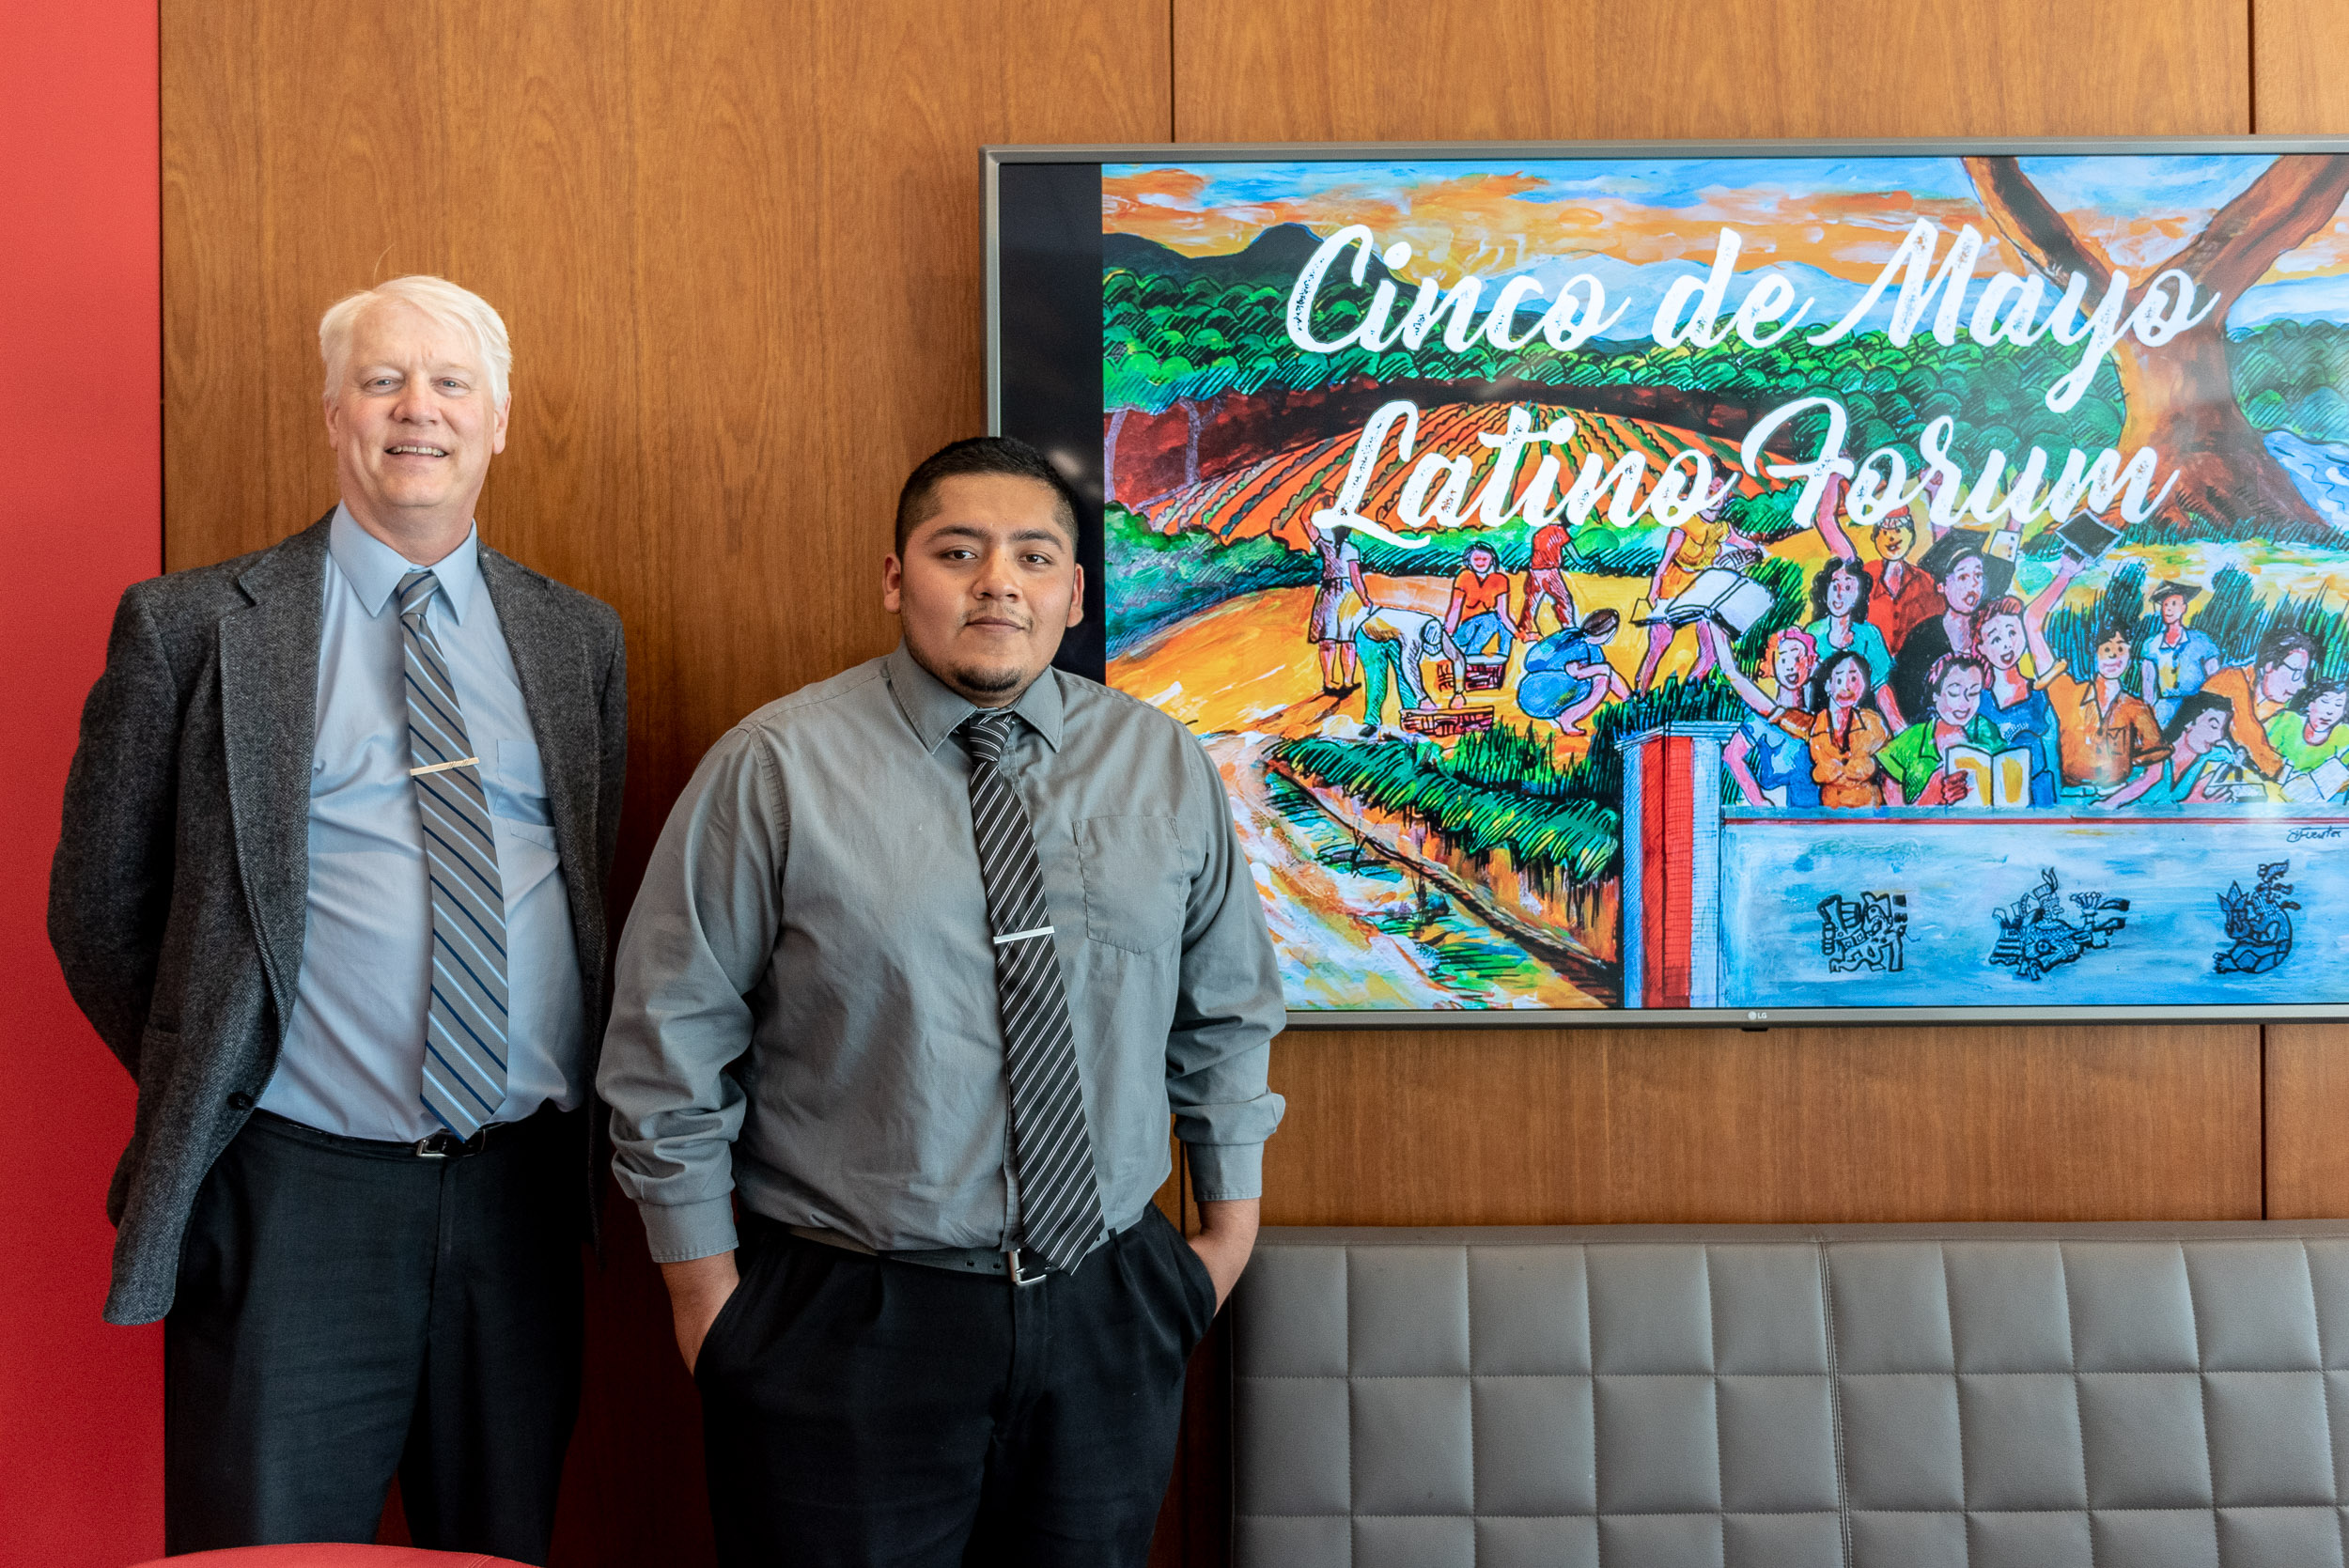 Cinco de Mayo Latino Forum at Eastern Washington University